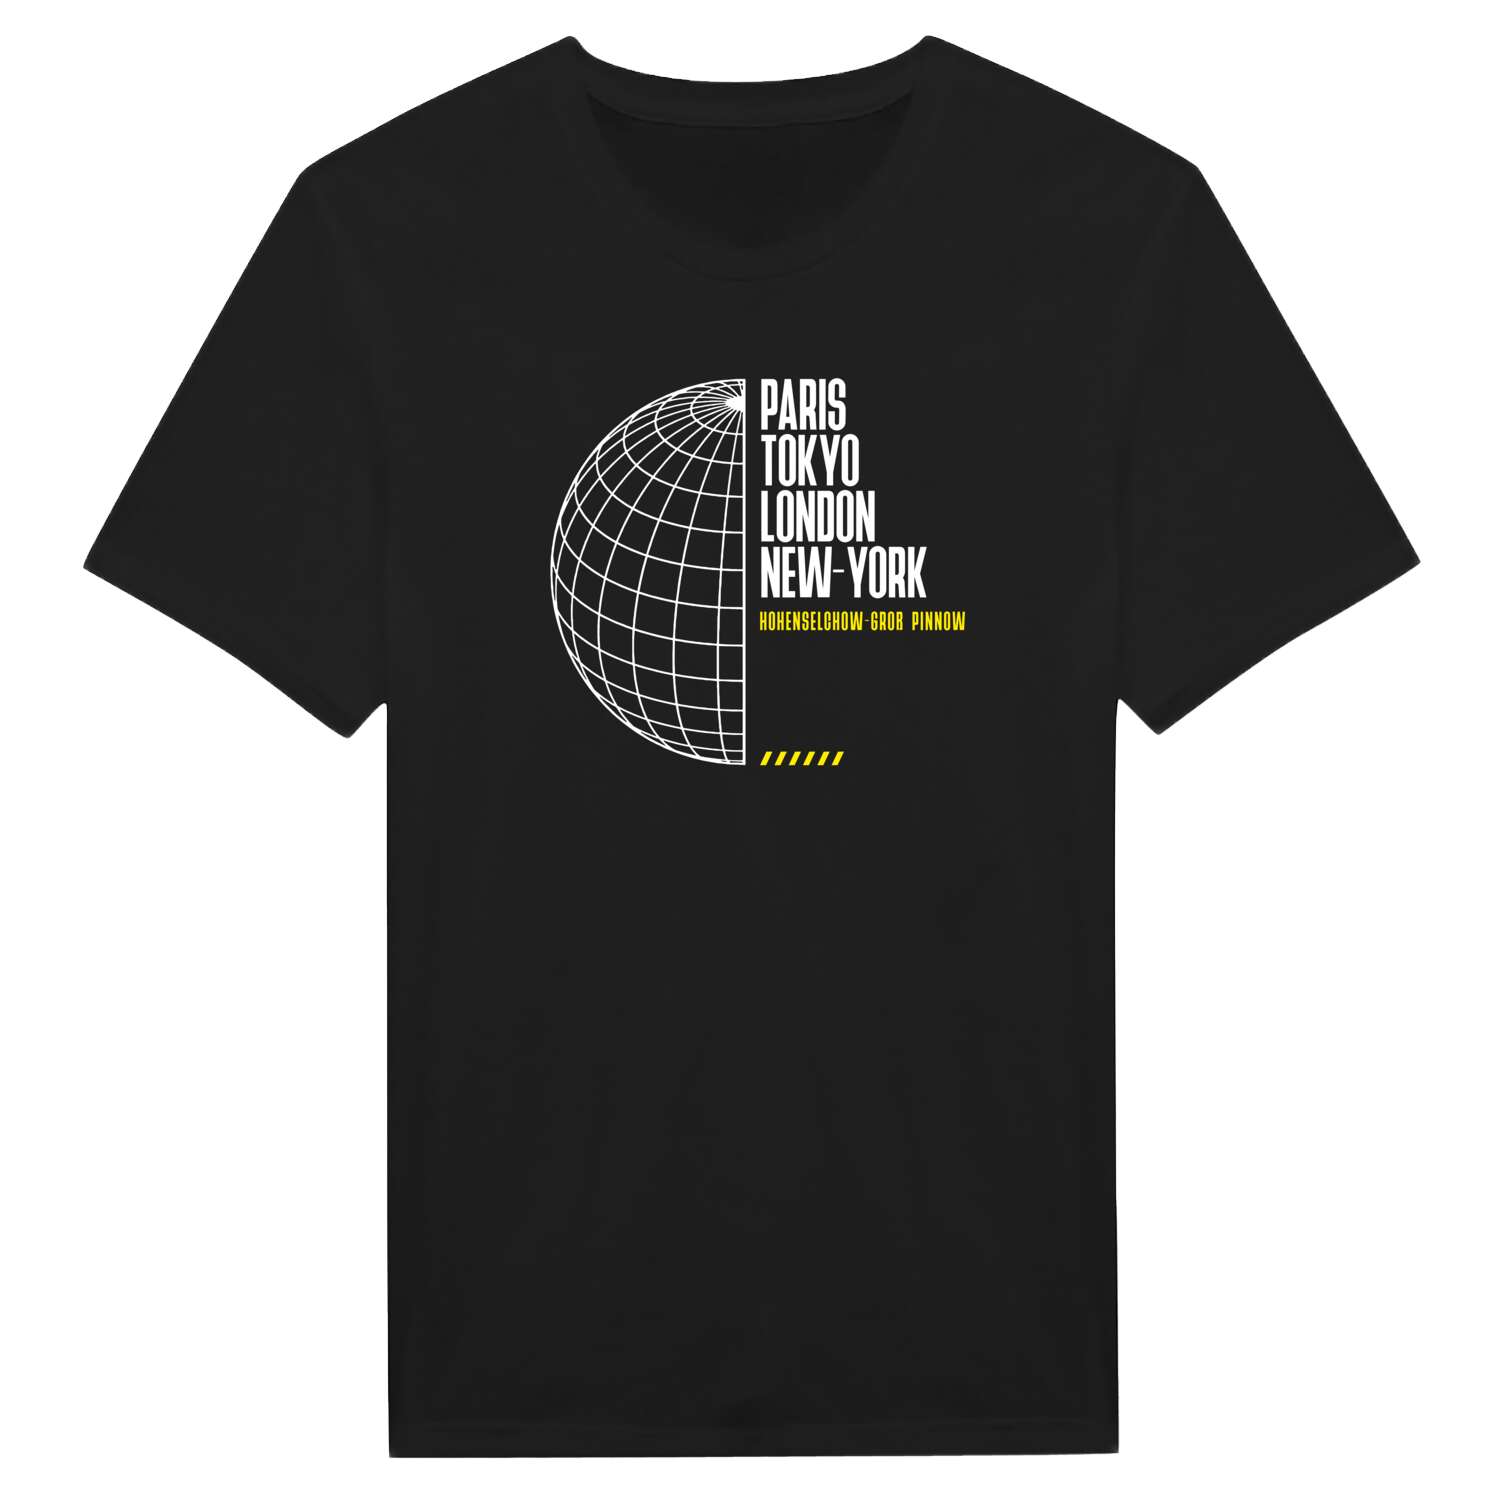 Hohenselchow-Groß Pinnow T-Shirt »Paris Tokyo London«